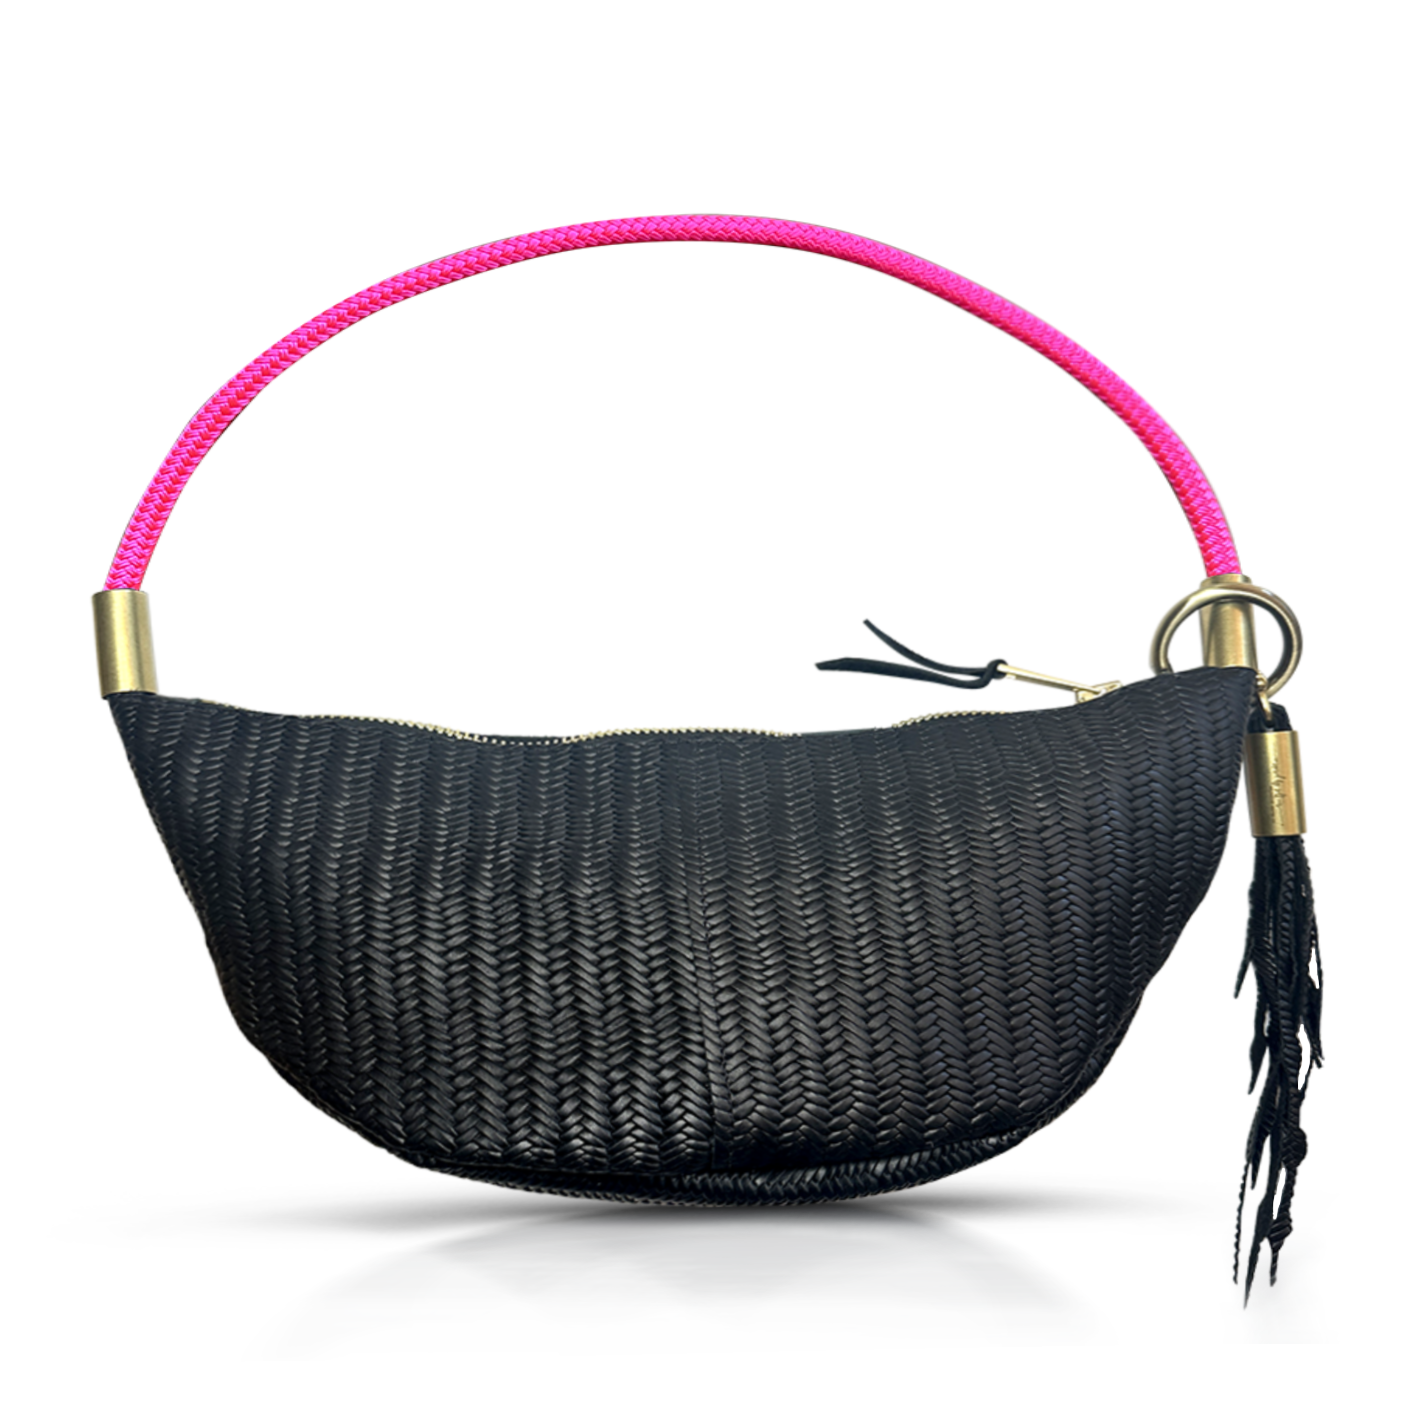 black basketweave leather sling bag with neon pink dock line handle